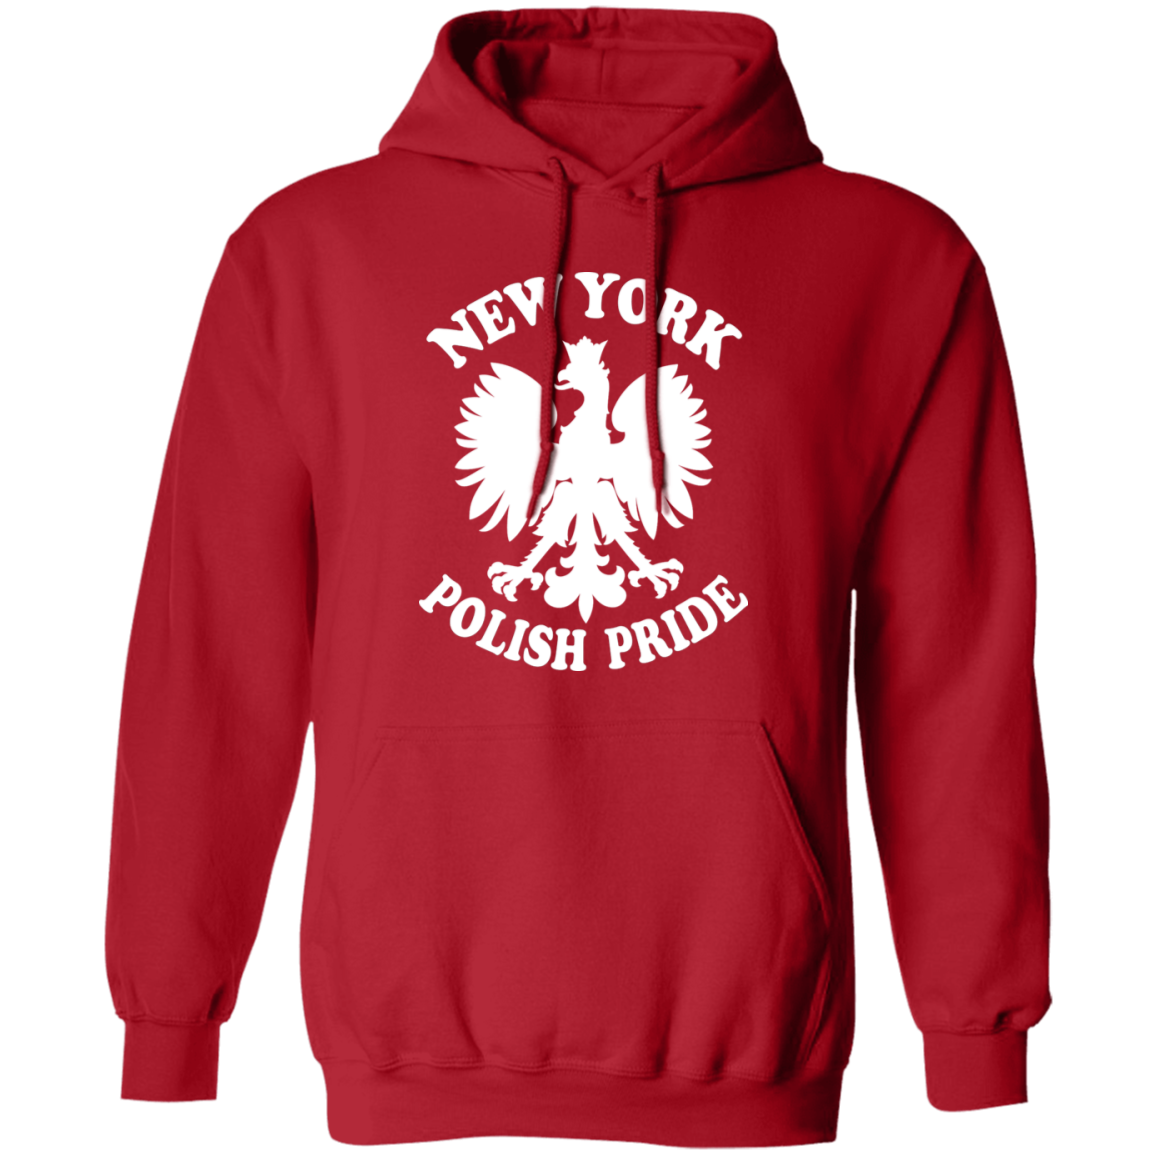 New York  Polish Pride Apparel CustomCat G185 Pullover Hoodie Red S